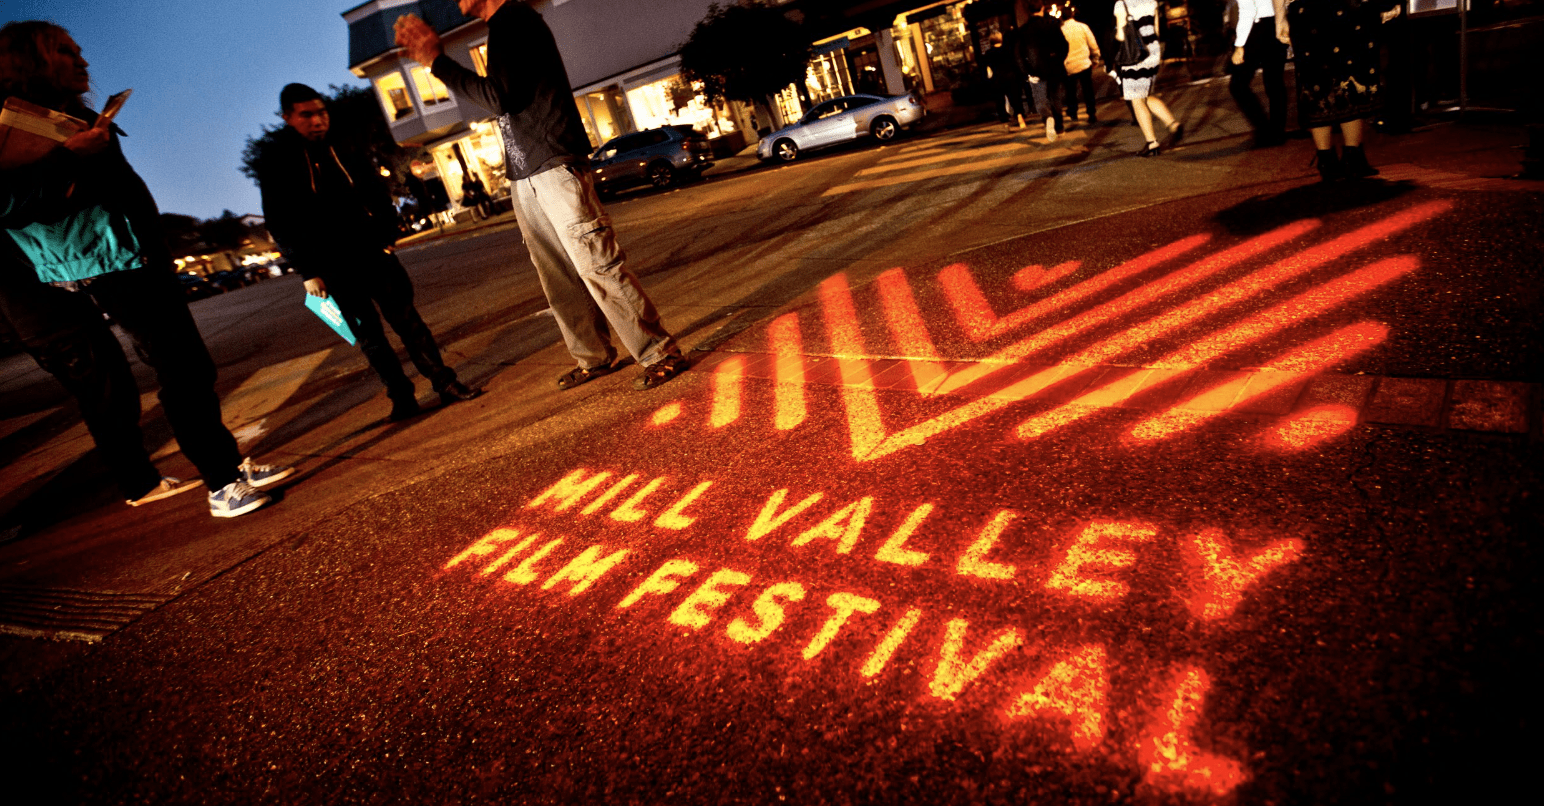 Logo of Mill Valley FIlm Festival projected onto sidewalk